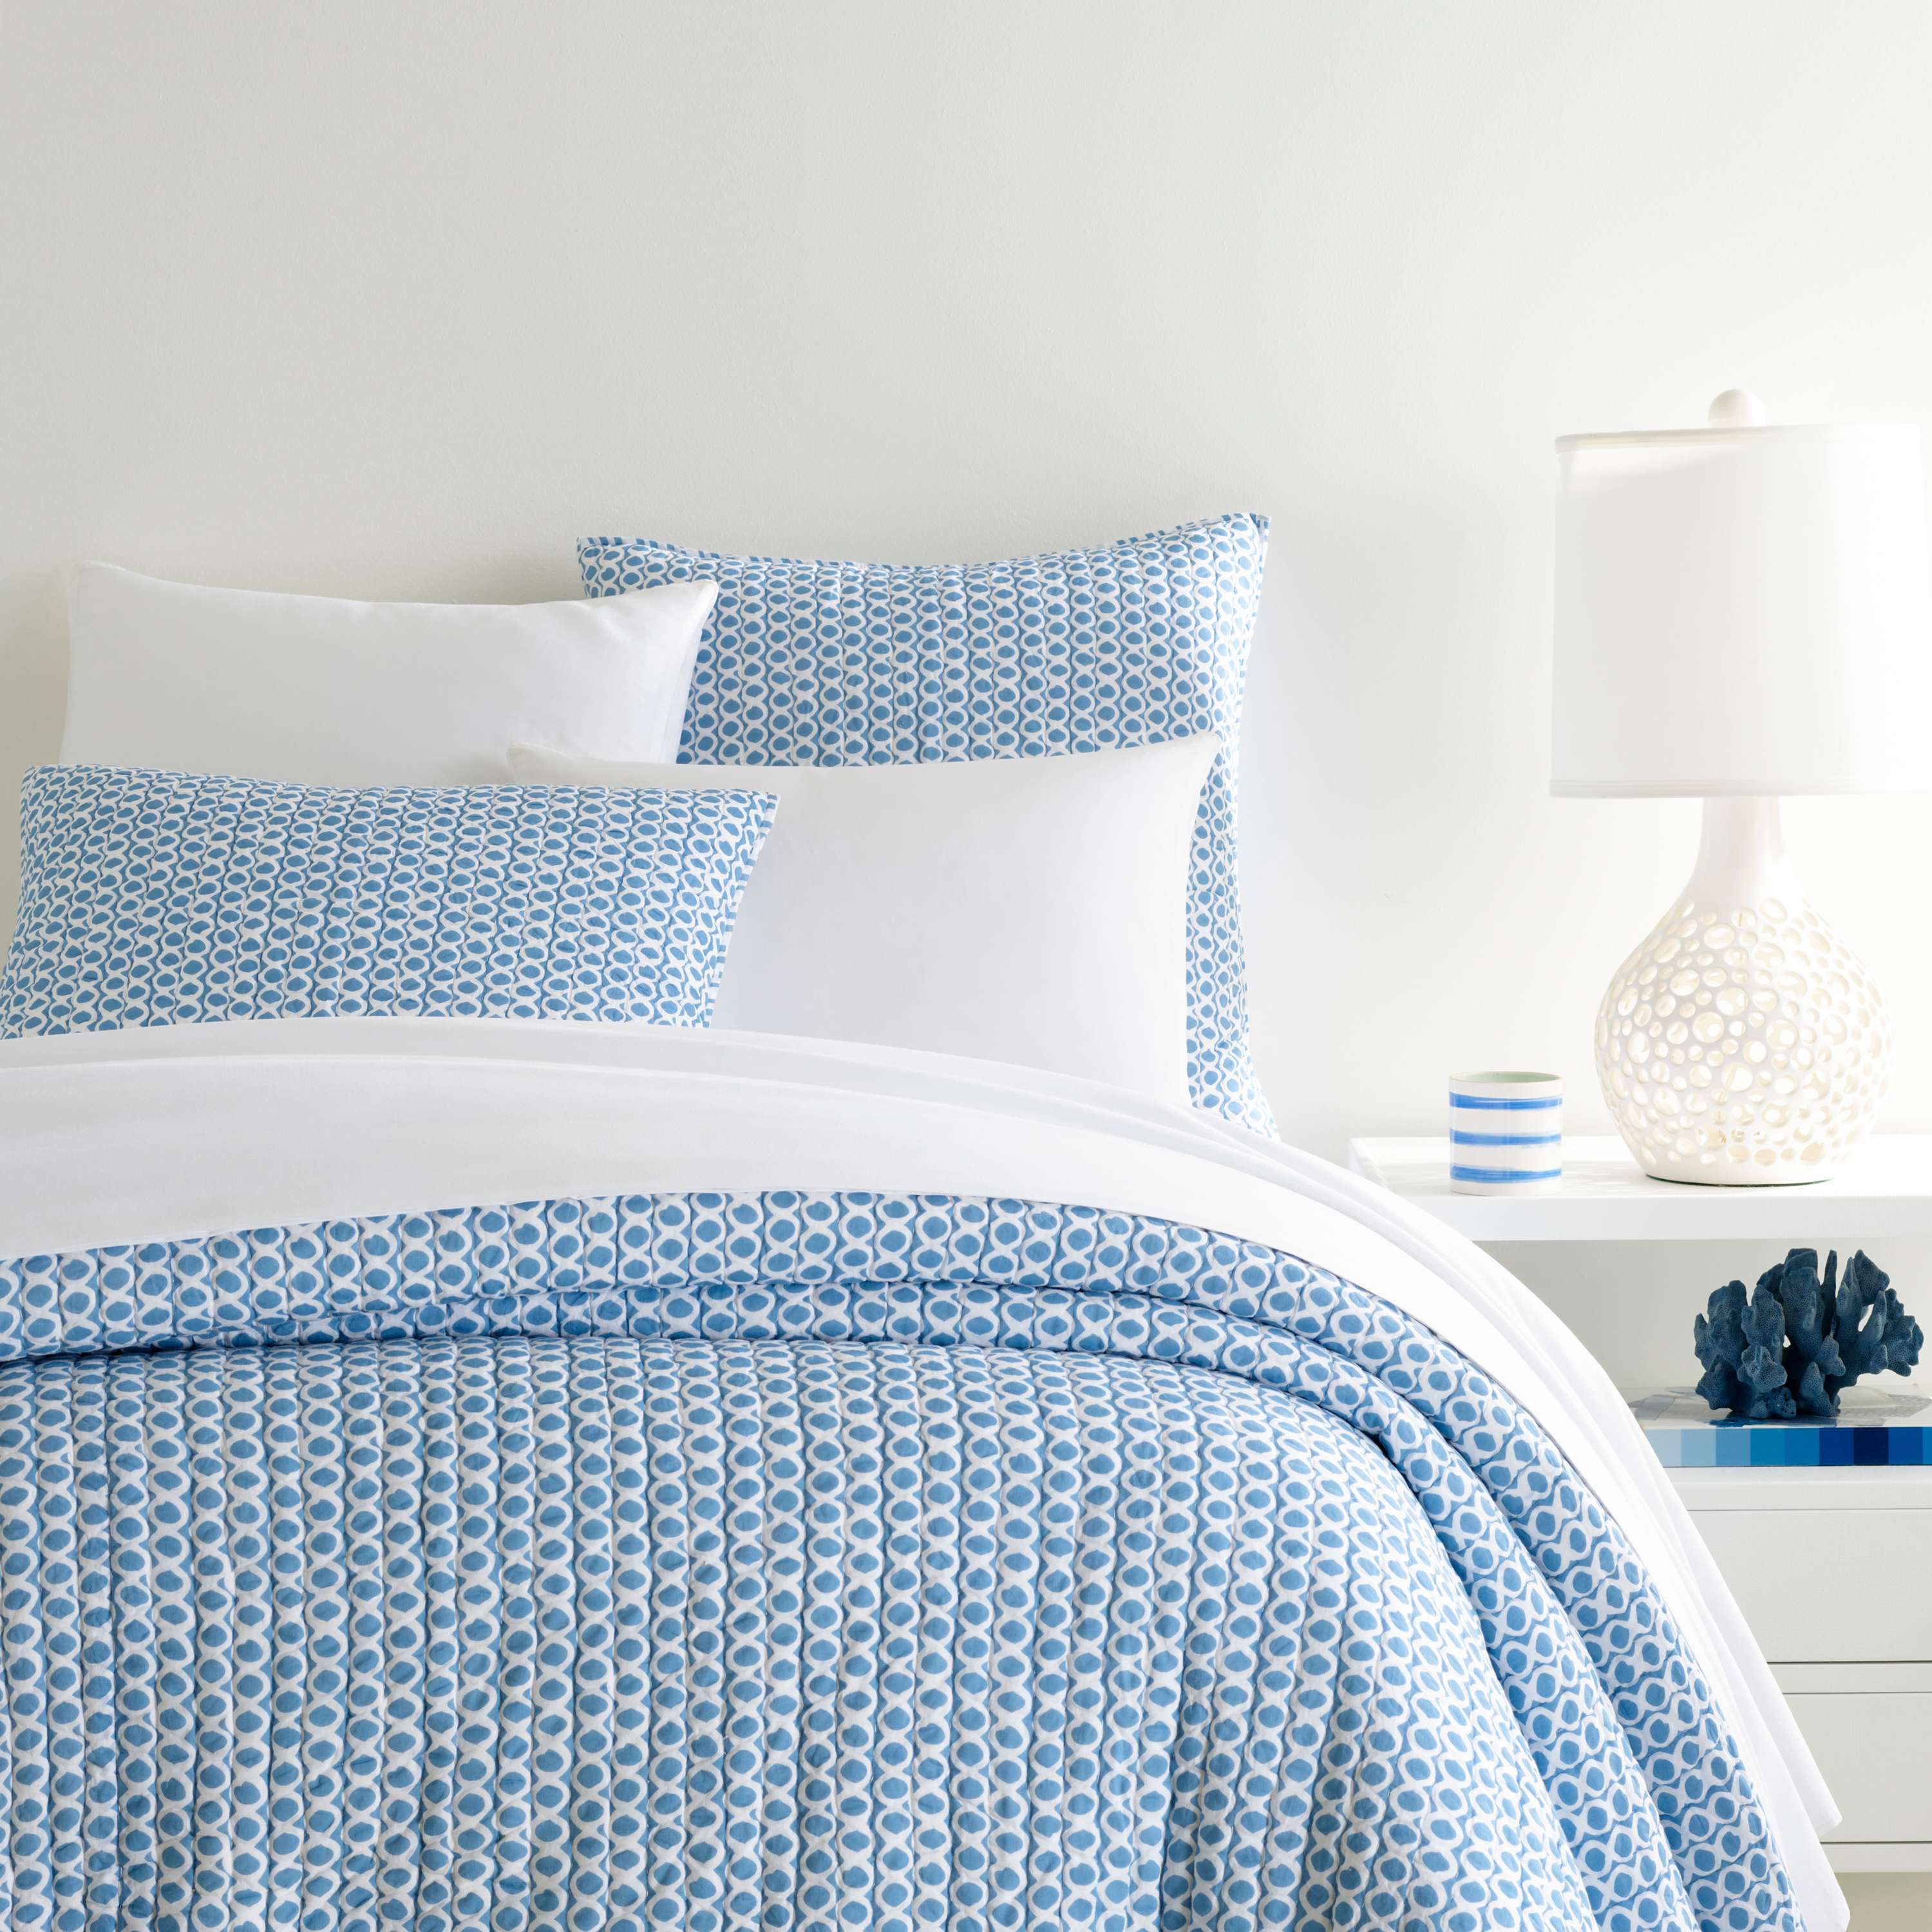 blue quilt bedding